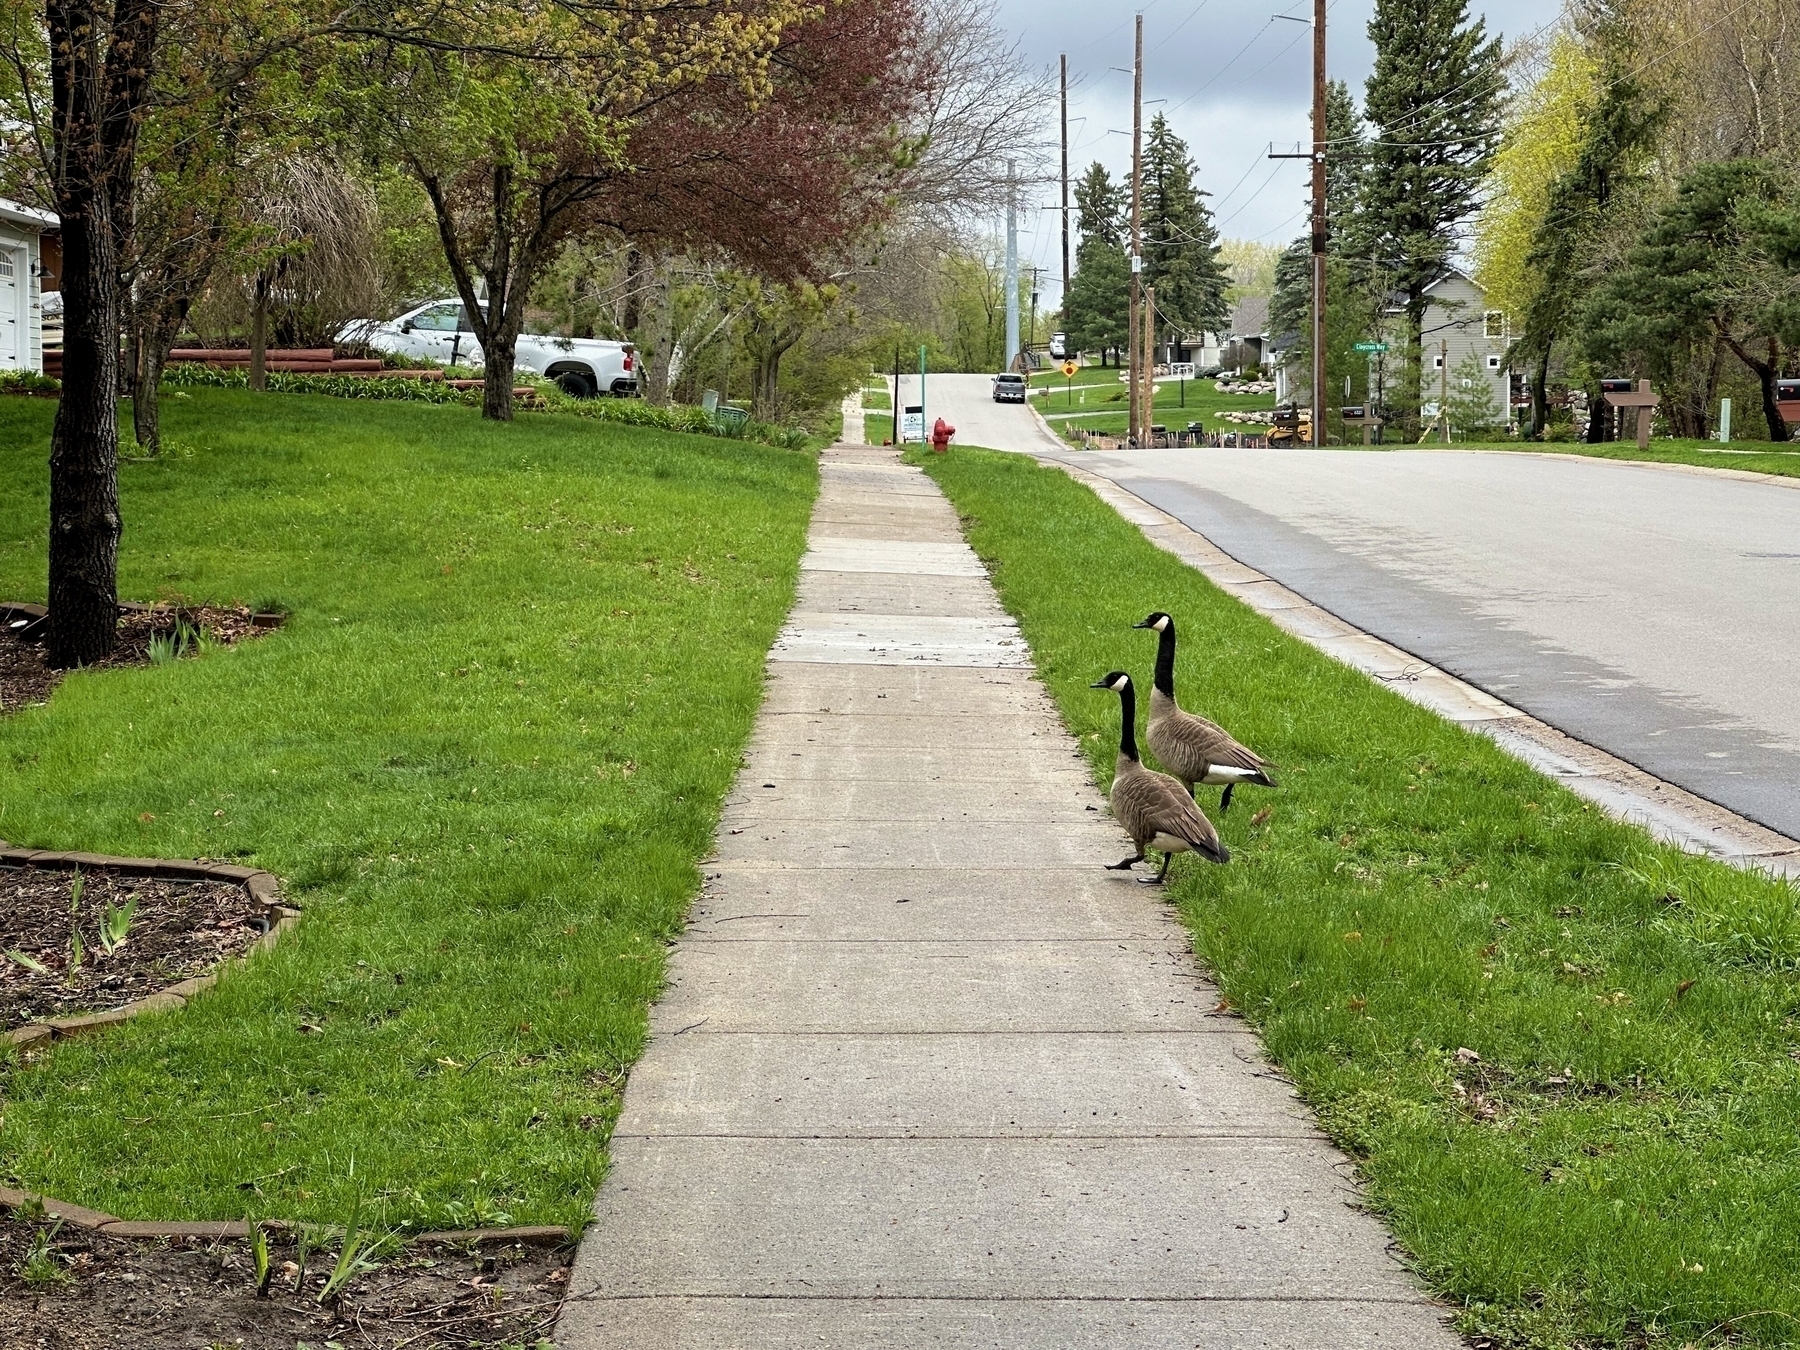 Two geese walk on a sidewalk alongside a grassy area with trees, near a residential street.